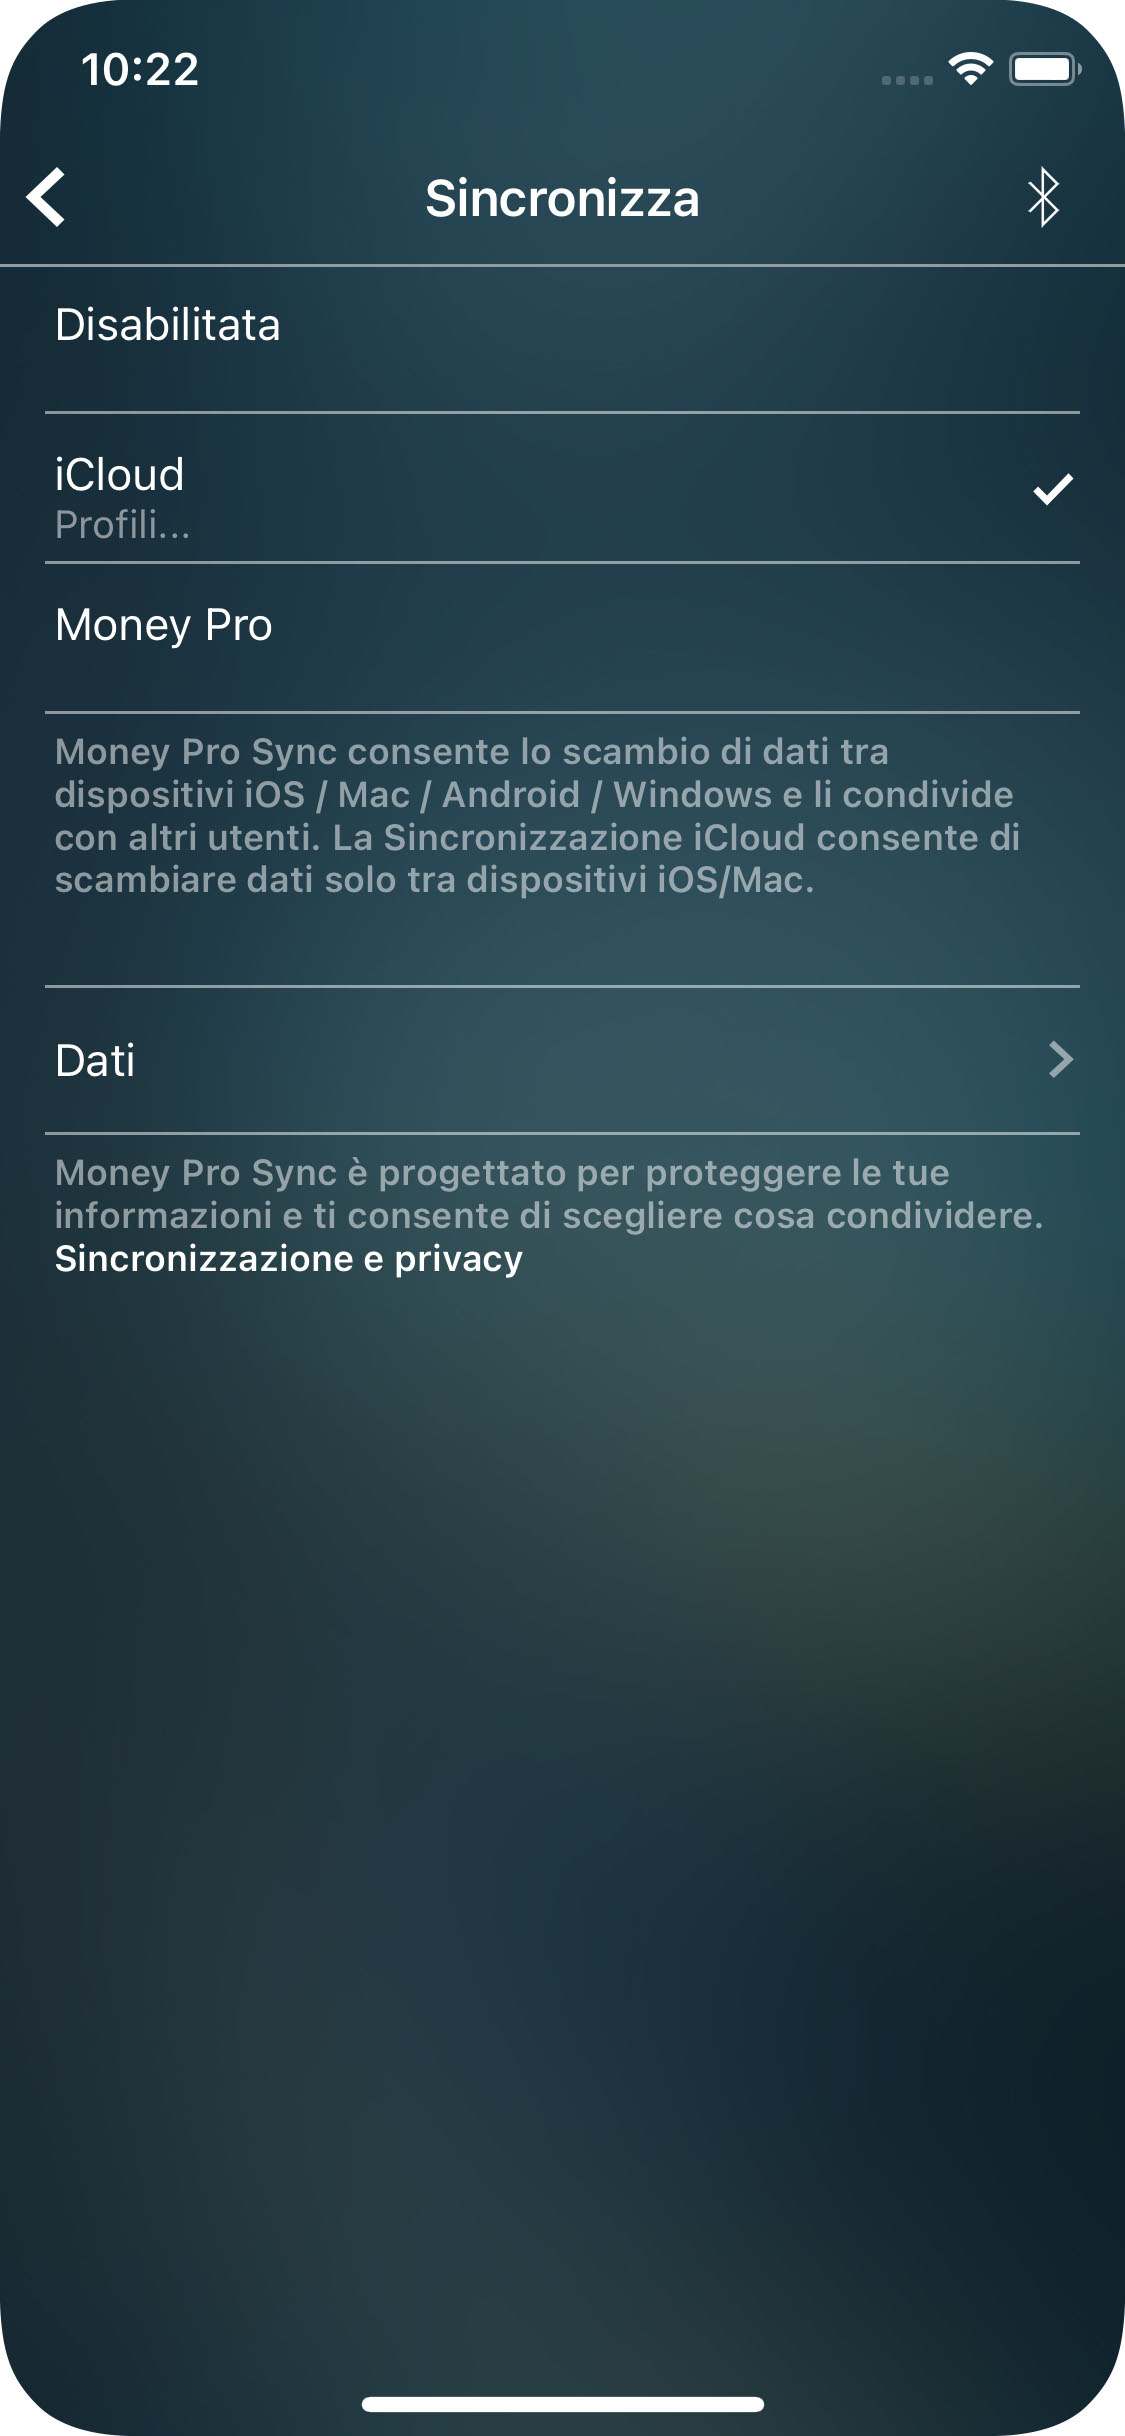 Money Pro - Sincronizzazione iCloud (iOS, Mac) - iPhone